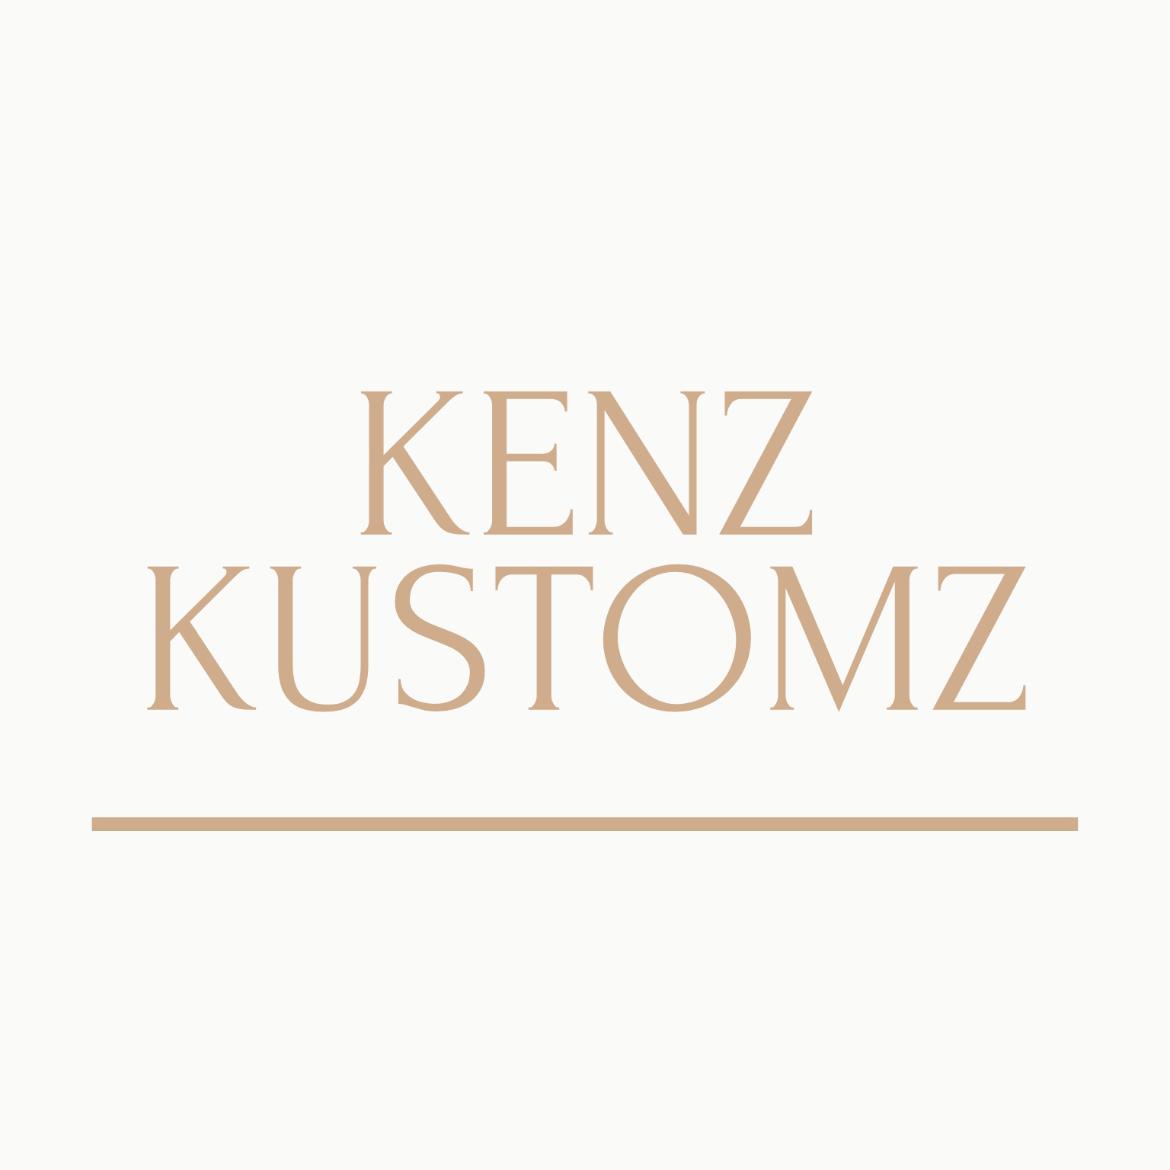 KENZKUSTOMZ's images